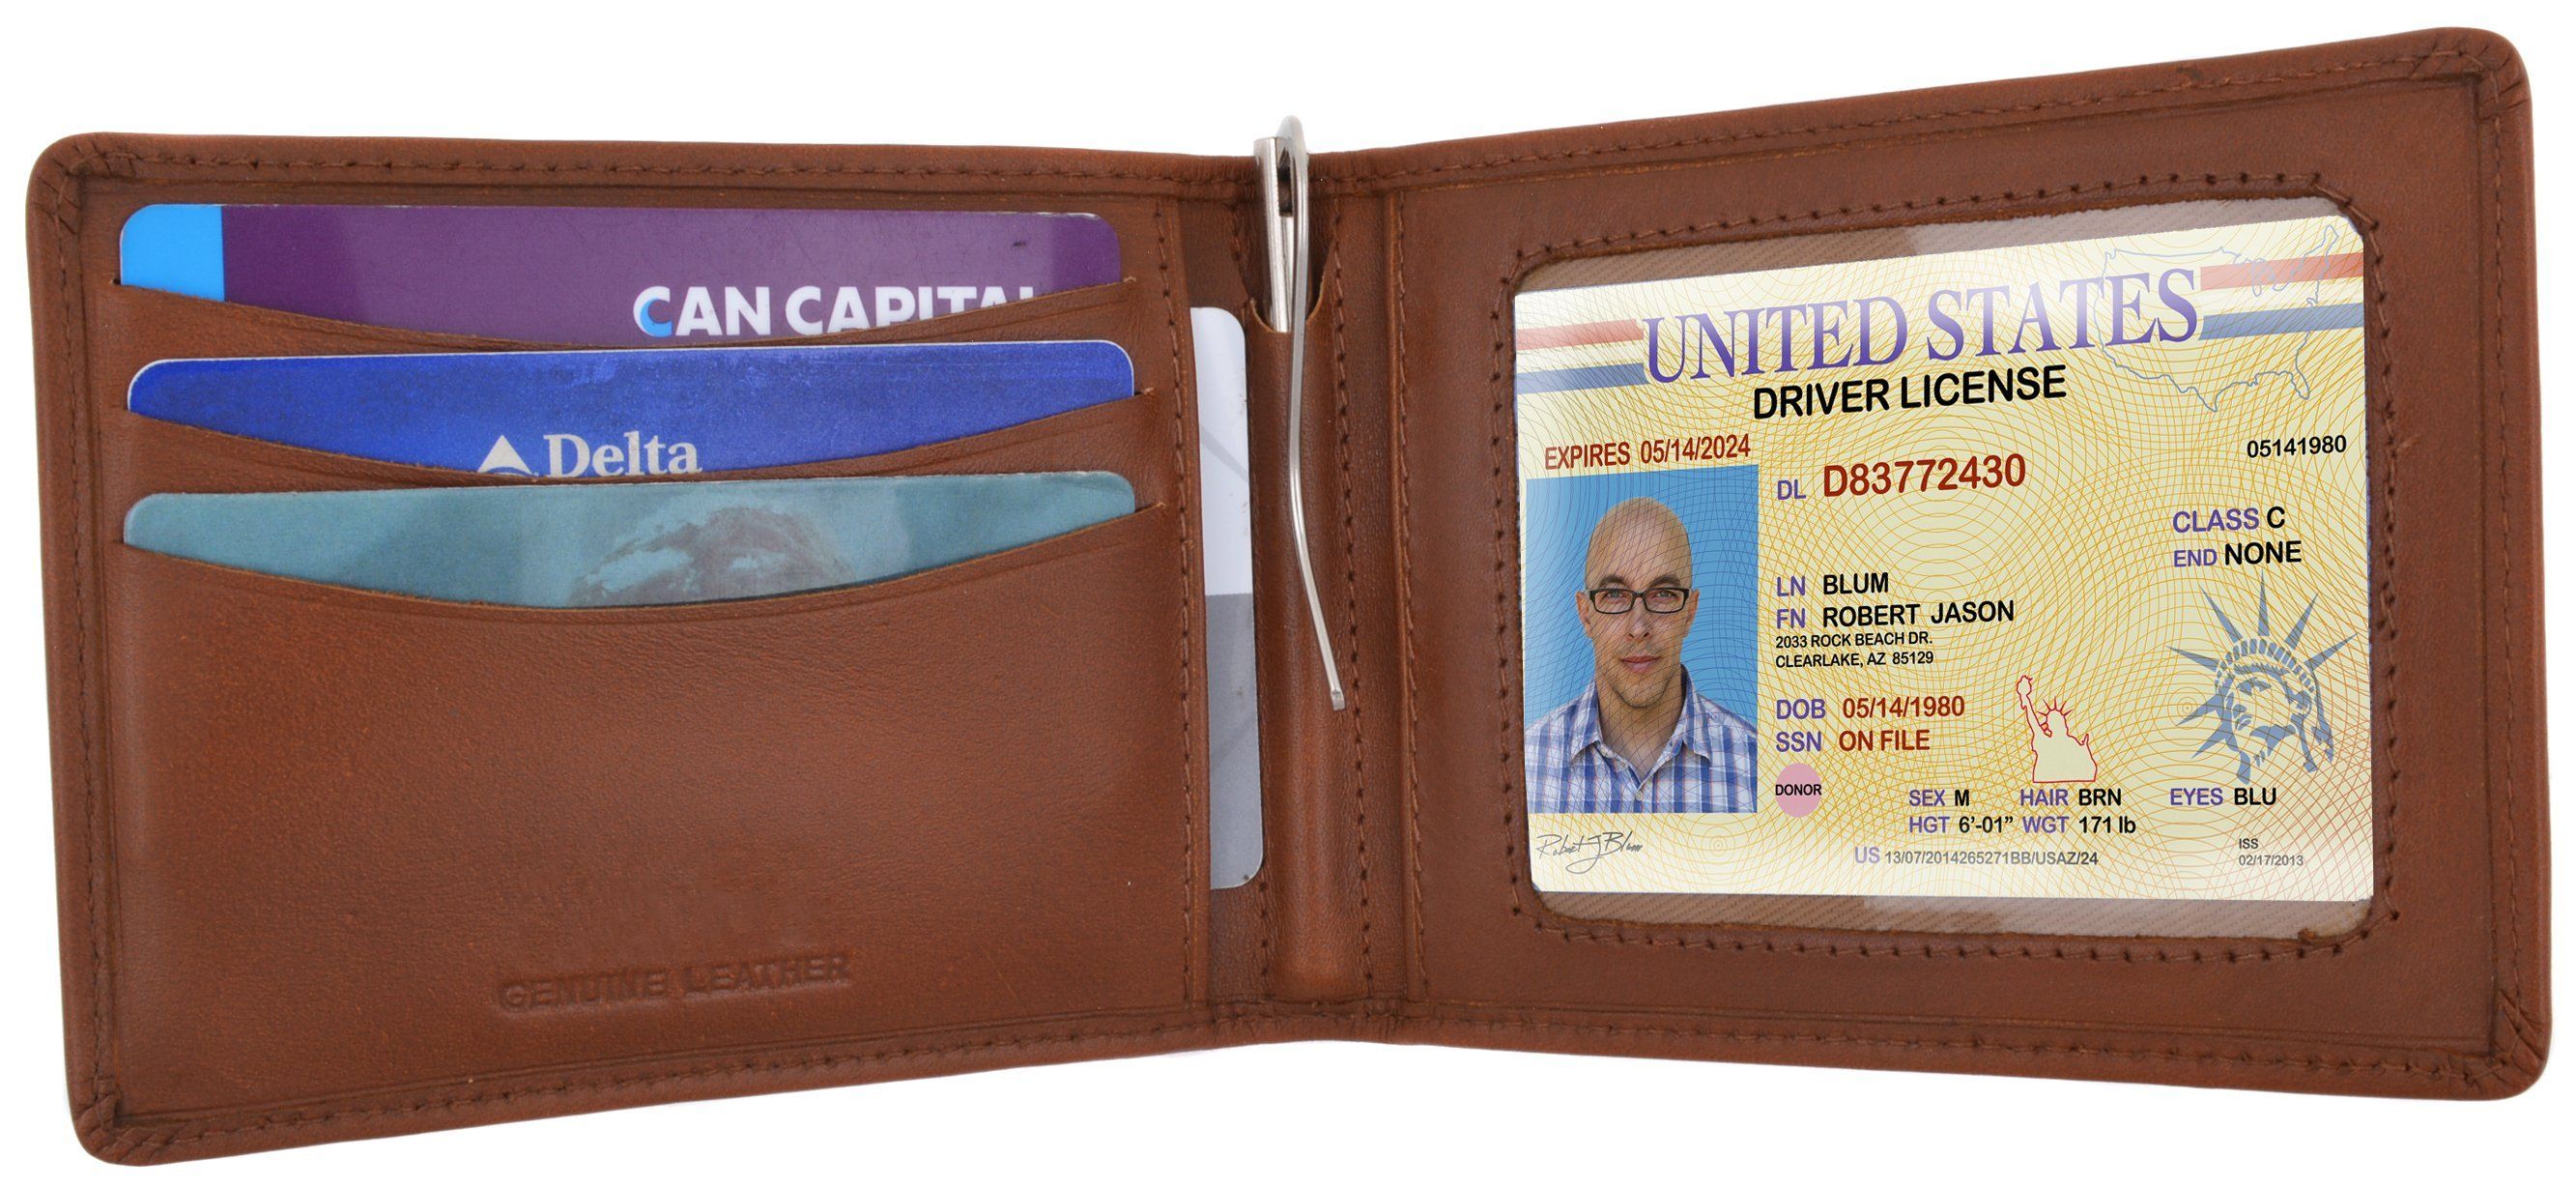 AFONiE Genuine Leather Bi-fold Money Clip Wallet